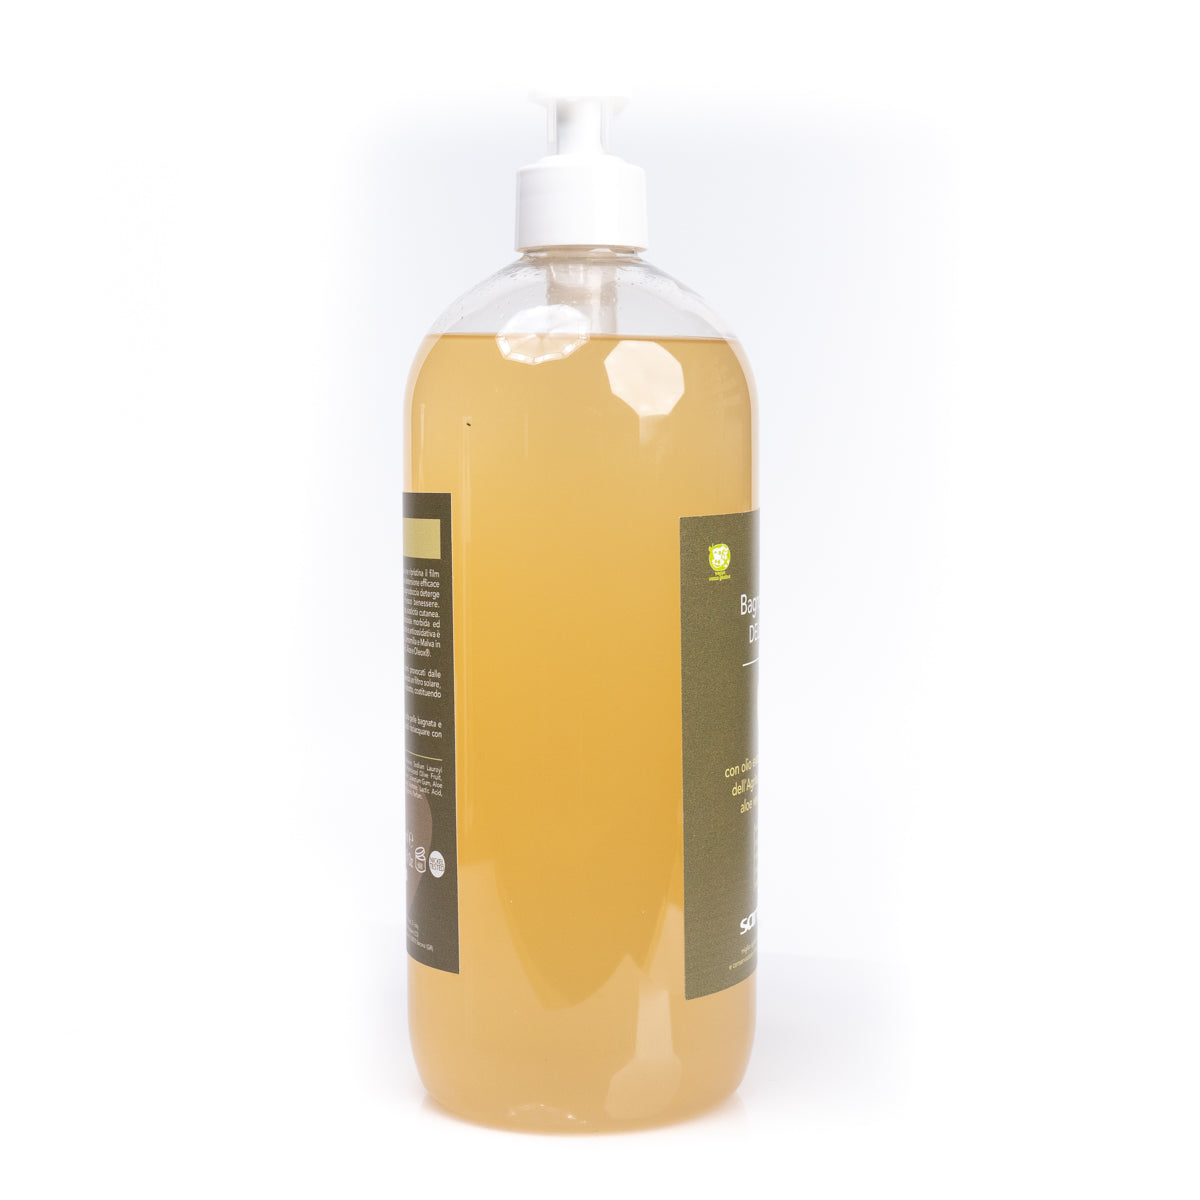 Shower gel, organic soap with organic EVO oil, 1 lt